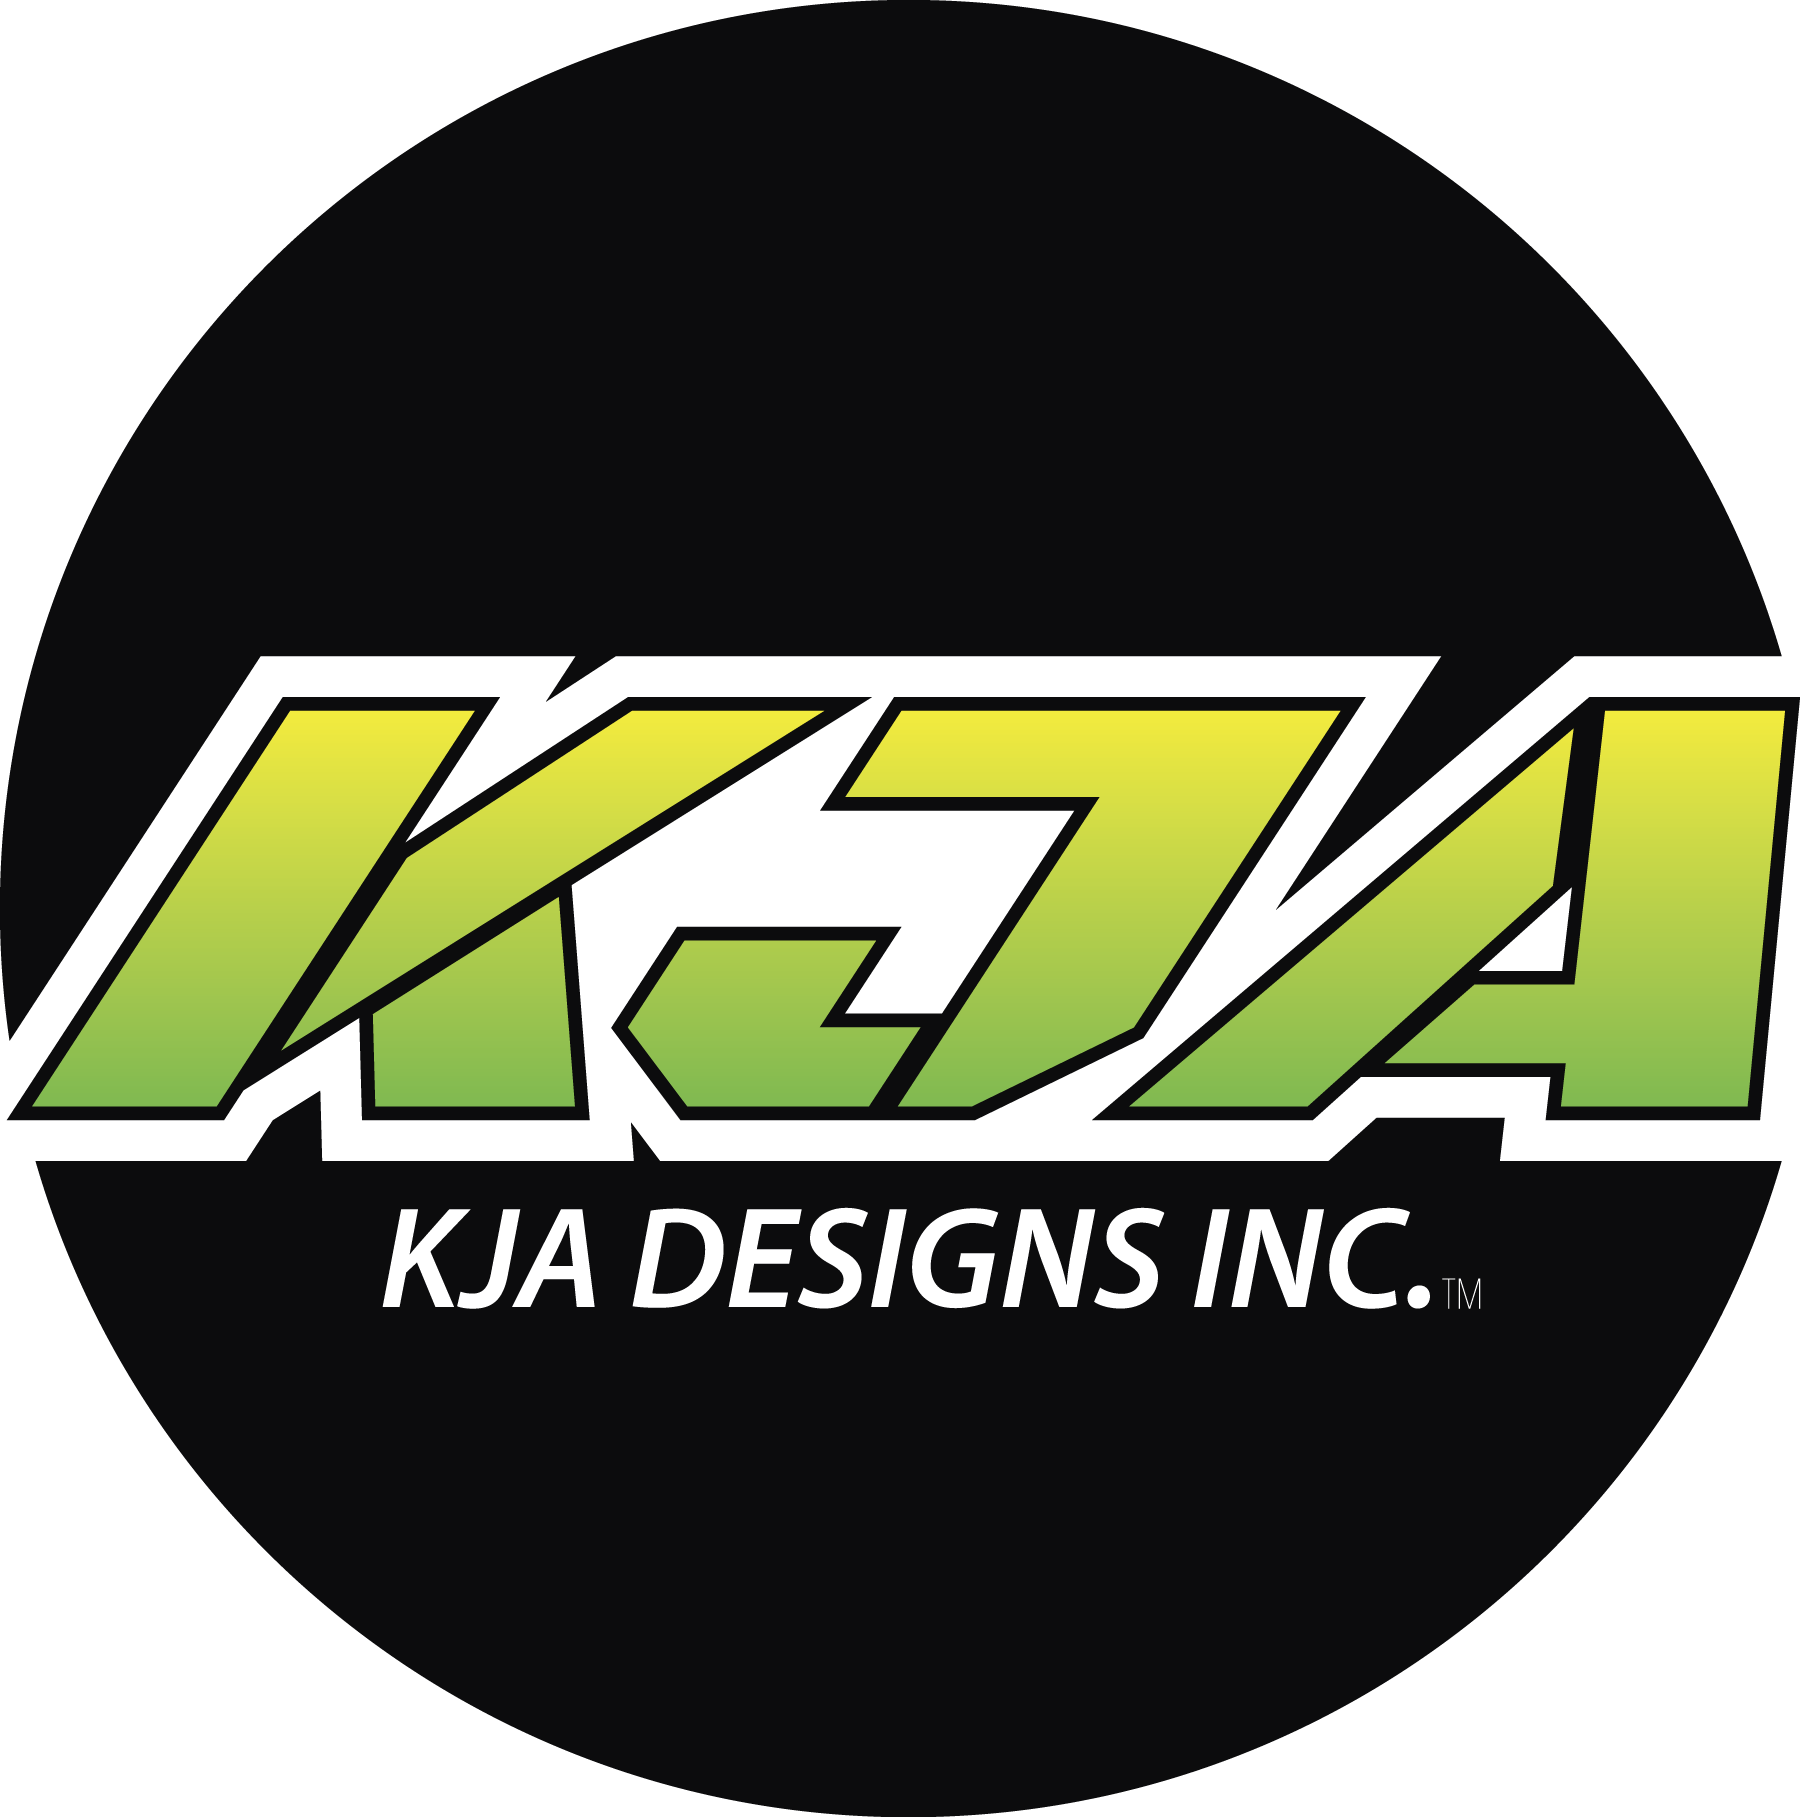 KJA Designs Inc.™ 2B on site